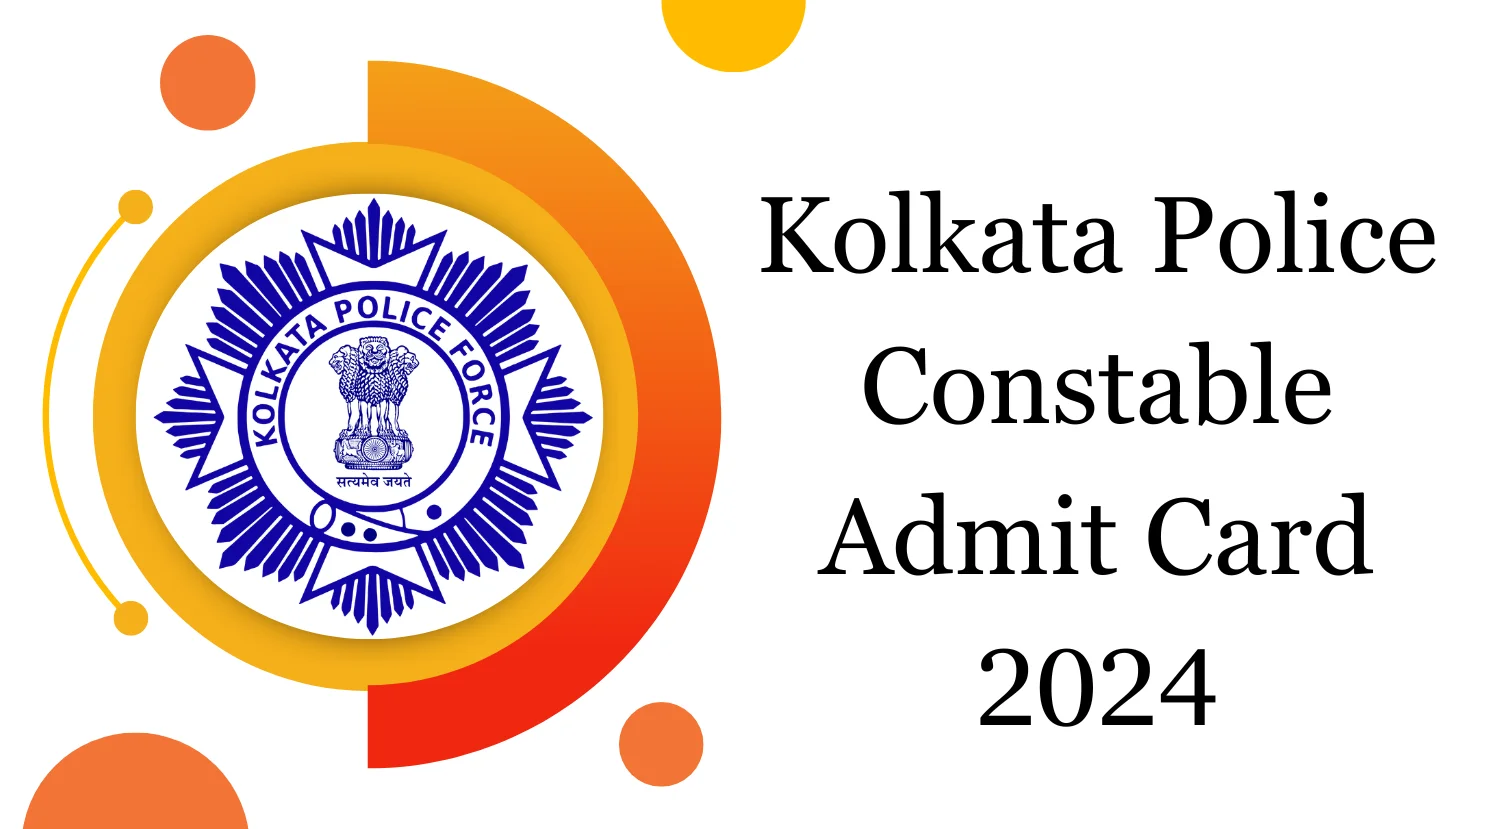 Kolkata Police Constable Admit Card 2024